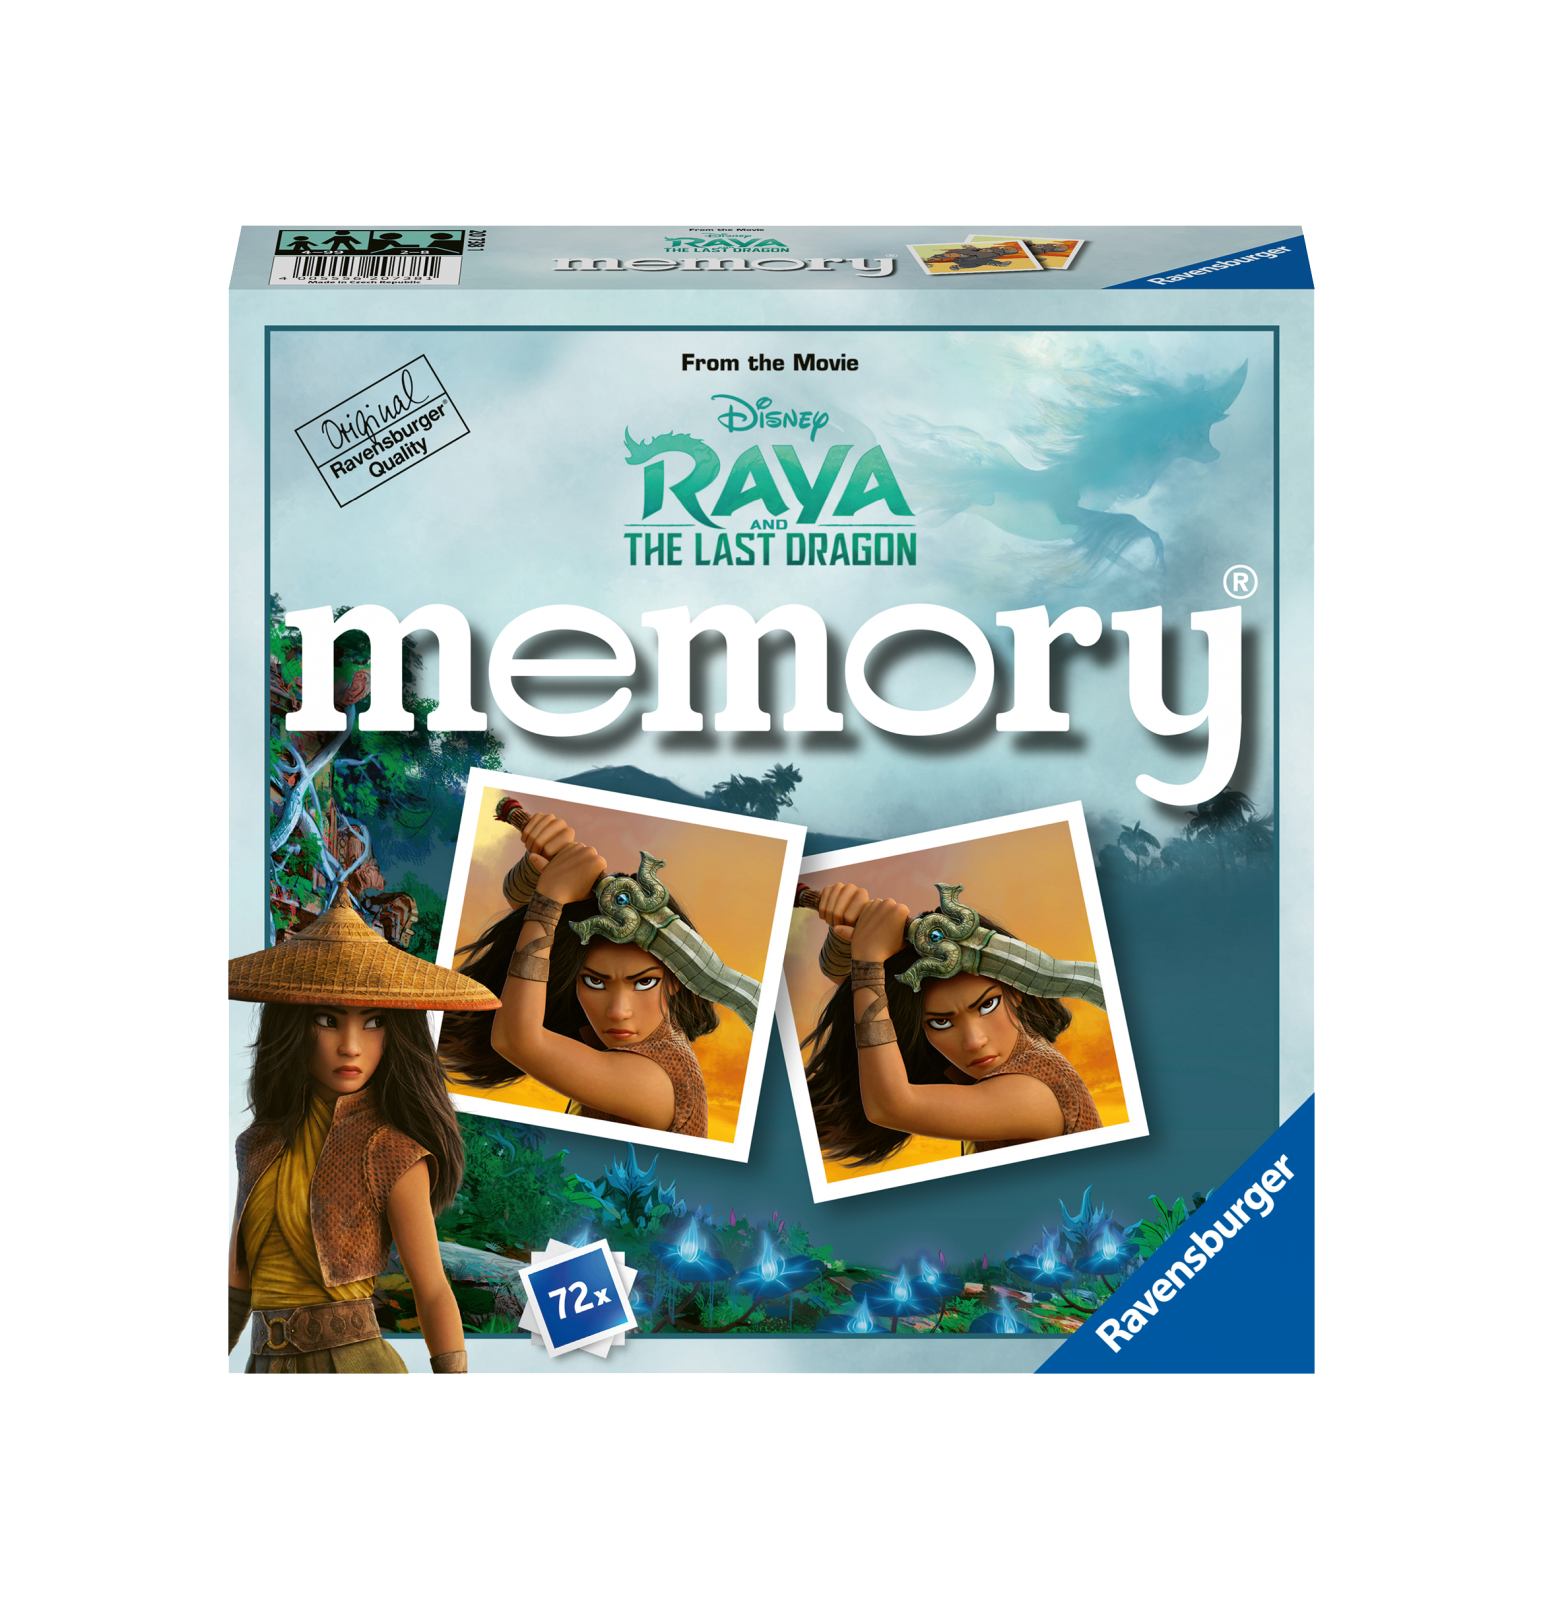 Ravensburger - memory versione raya, 72 tessere, gioco da tavolo, 4+ anni - DISNEY PRINCESS, RAVENSBURGER